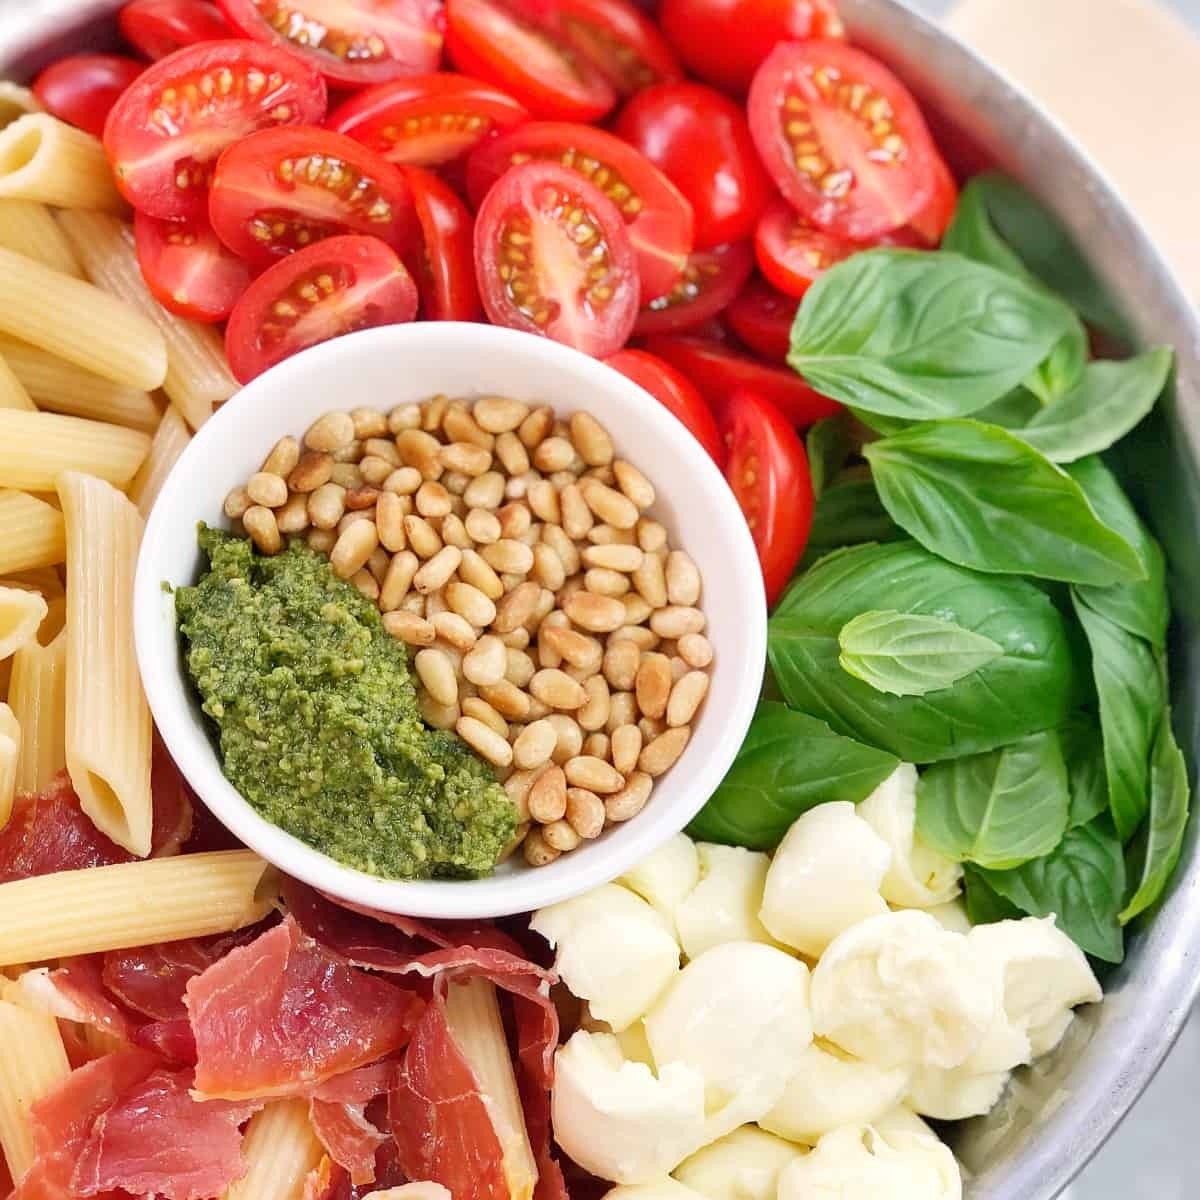 image showing ingredients needed to make this pasta salad recipe